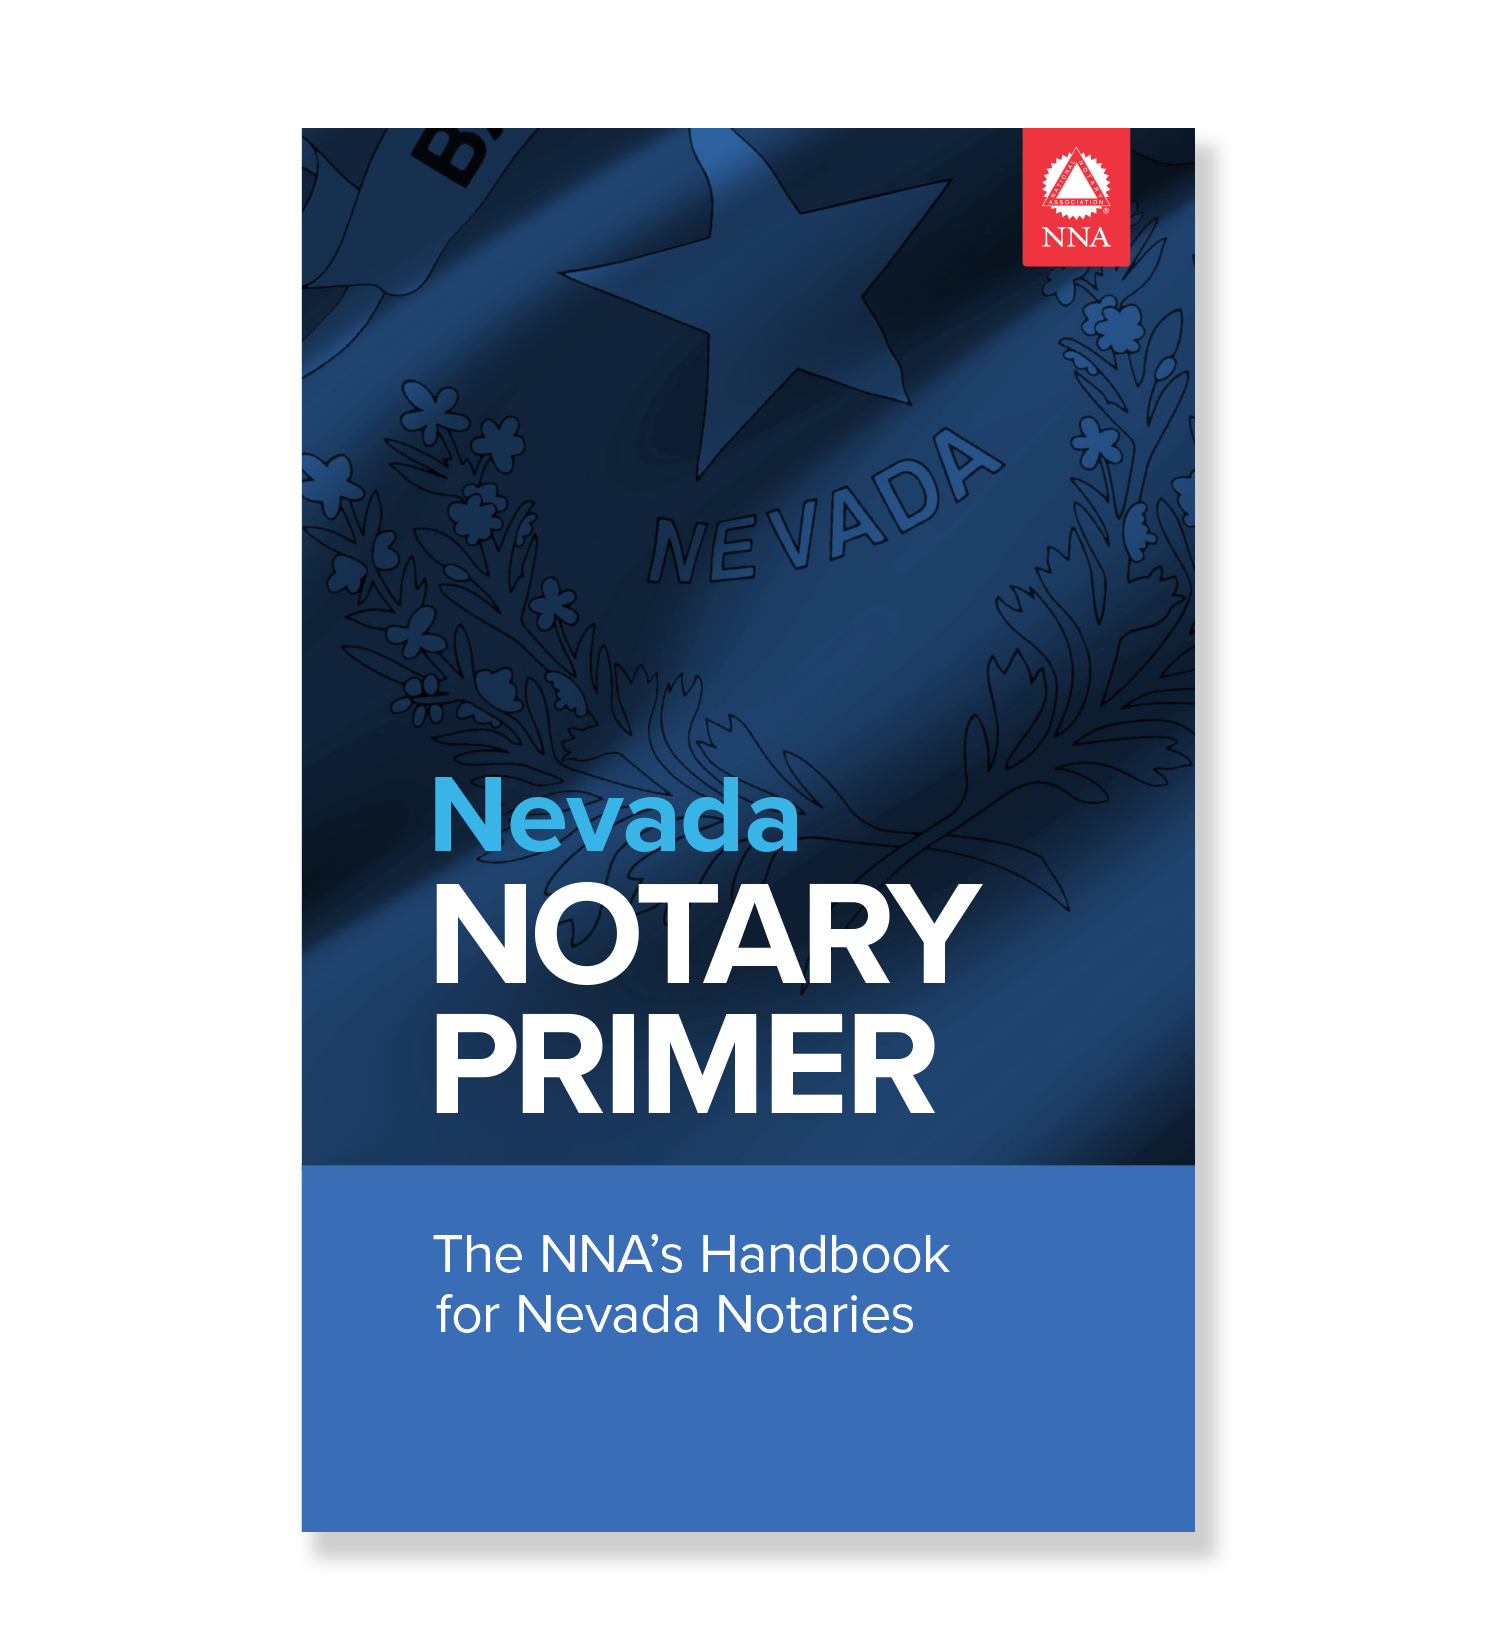 Nevada Notary Primer